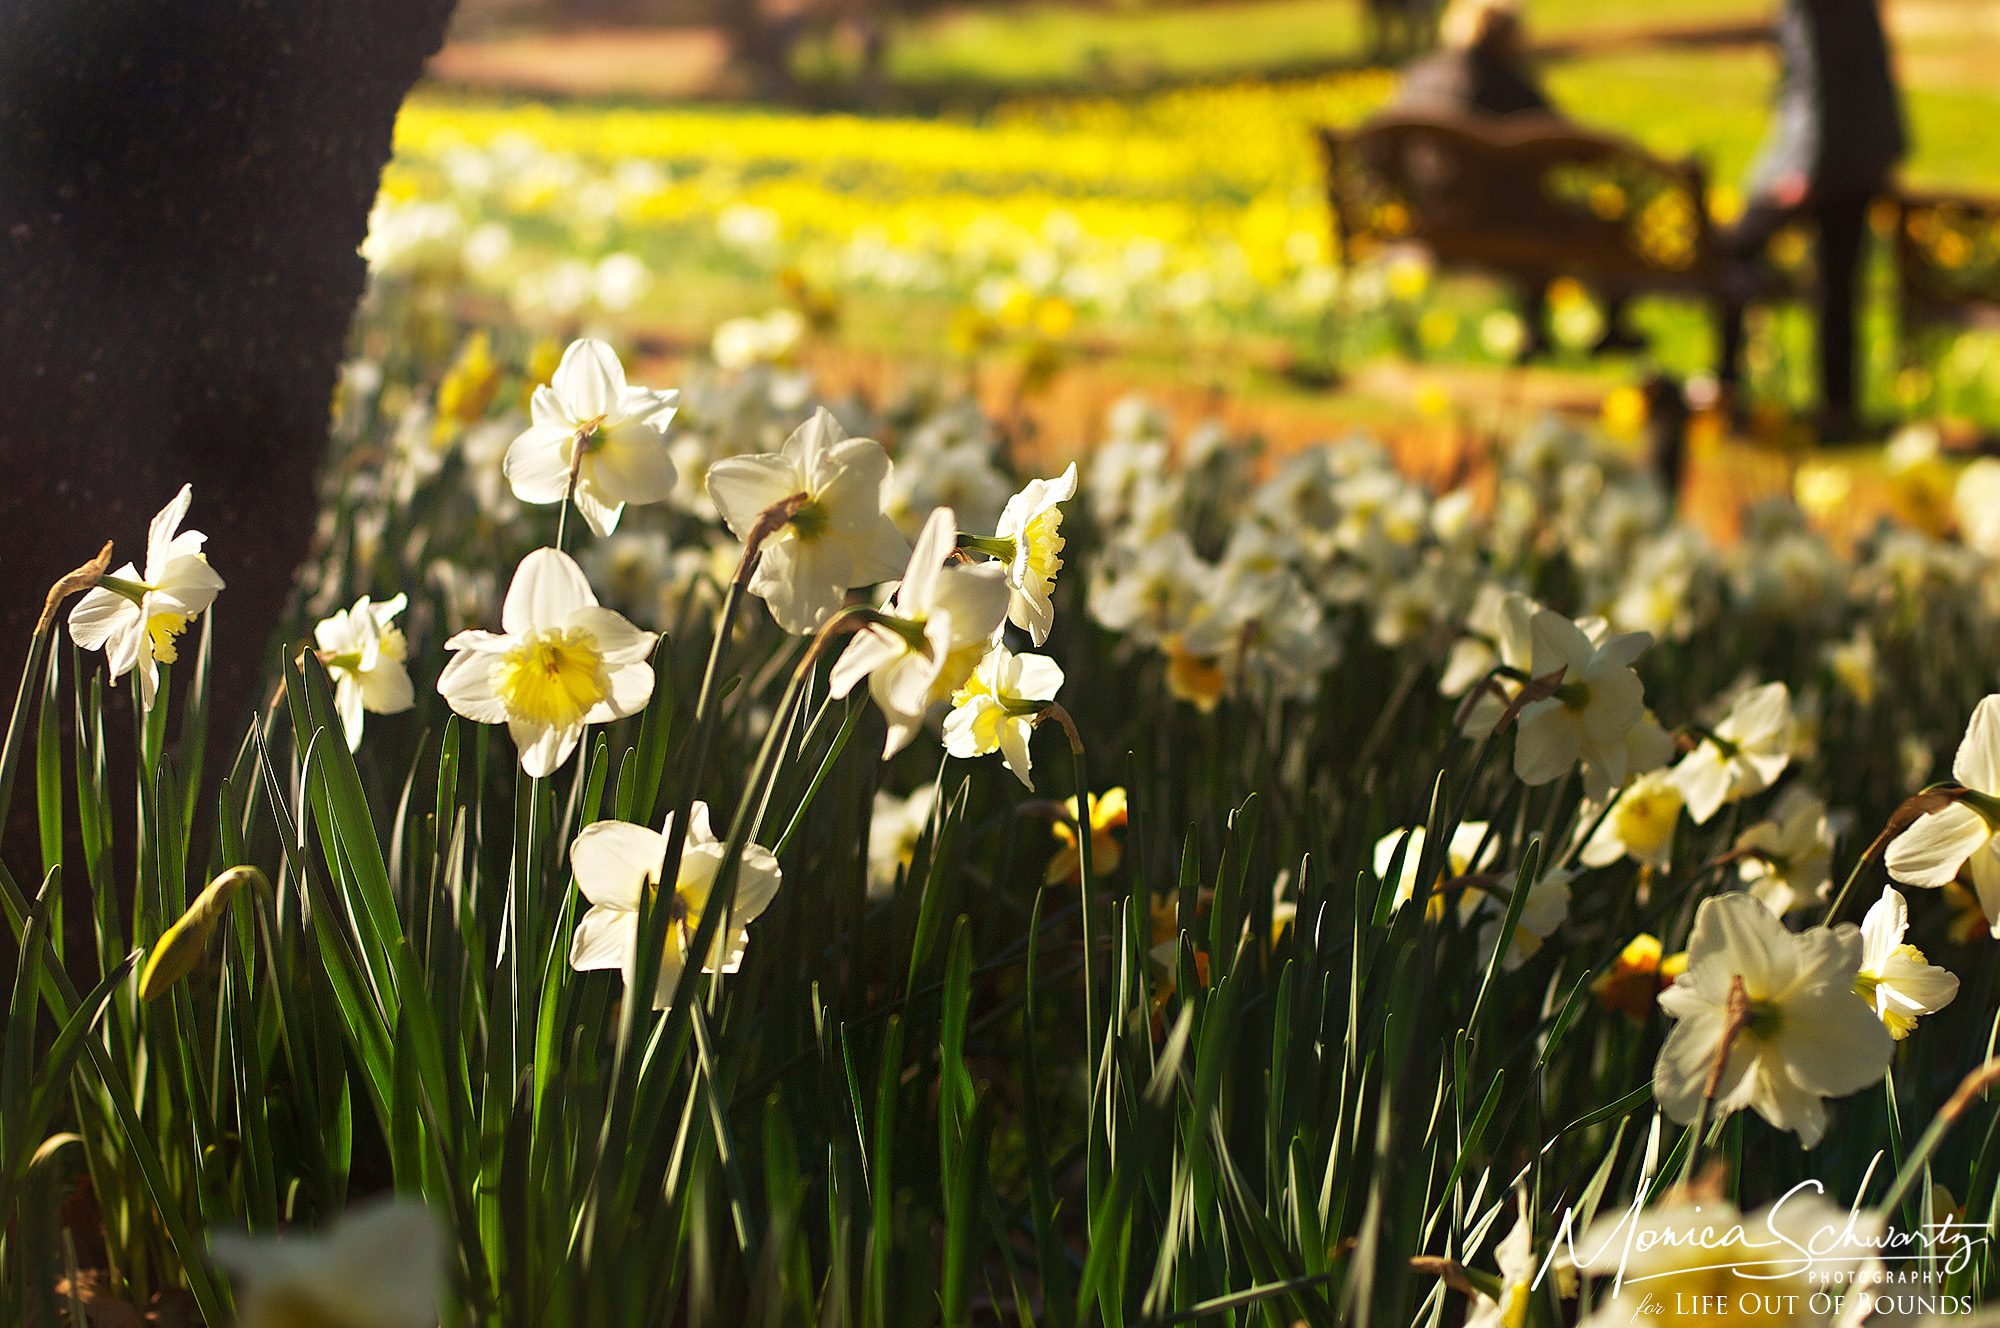 Daffodils-in-full-bloom-at-McLaughlins-Daffodil-Hill-Volcano-California